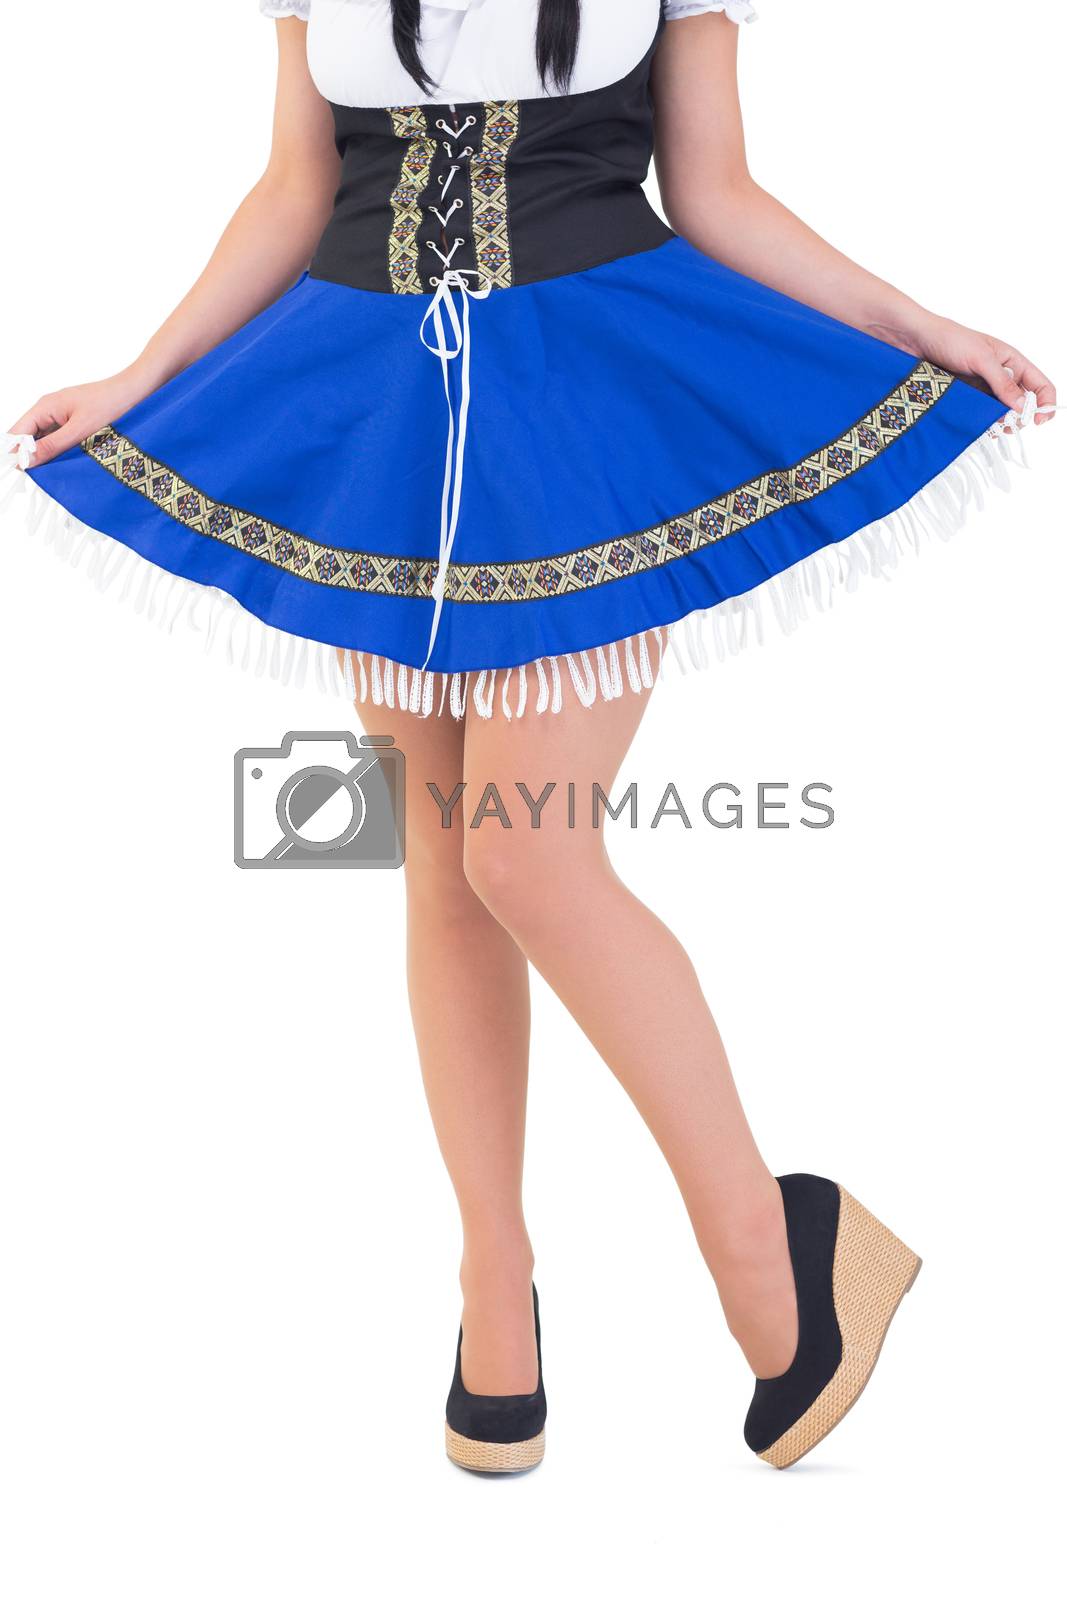 Royalty free image of Oktoberfest girl spreading her skirt by Wavebreakmedia